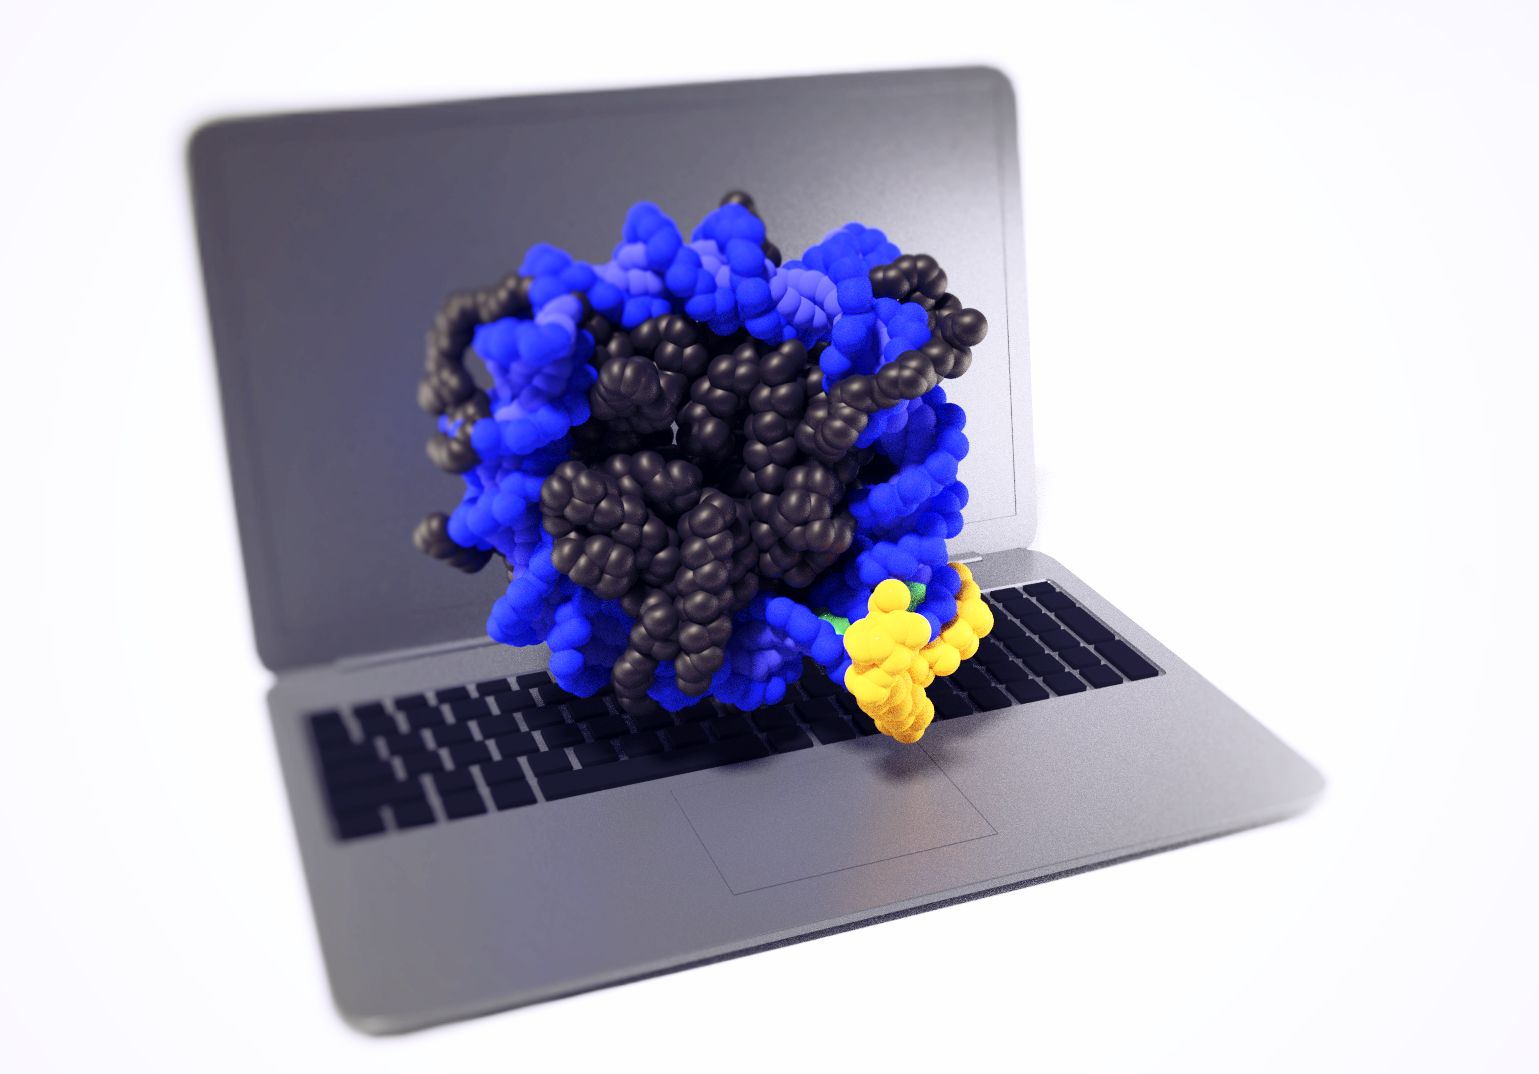 CG art of molecules on a laptop.